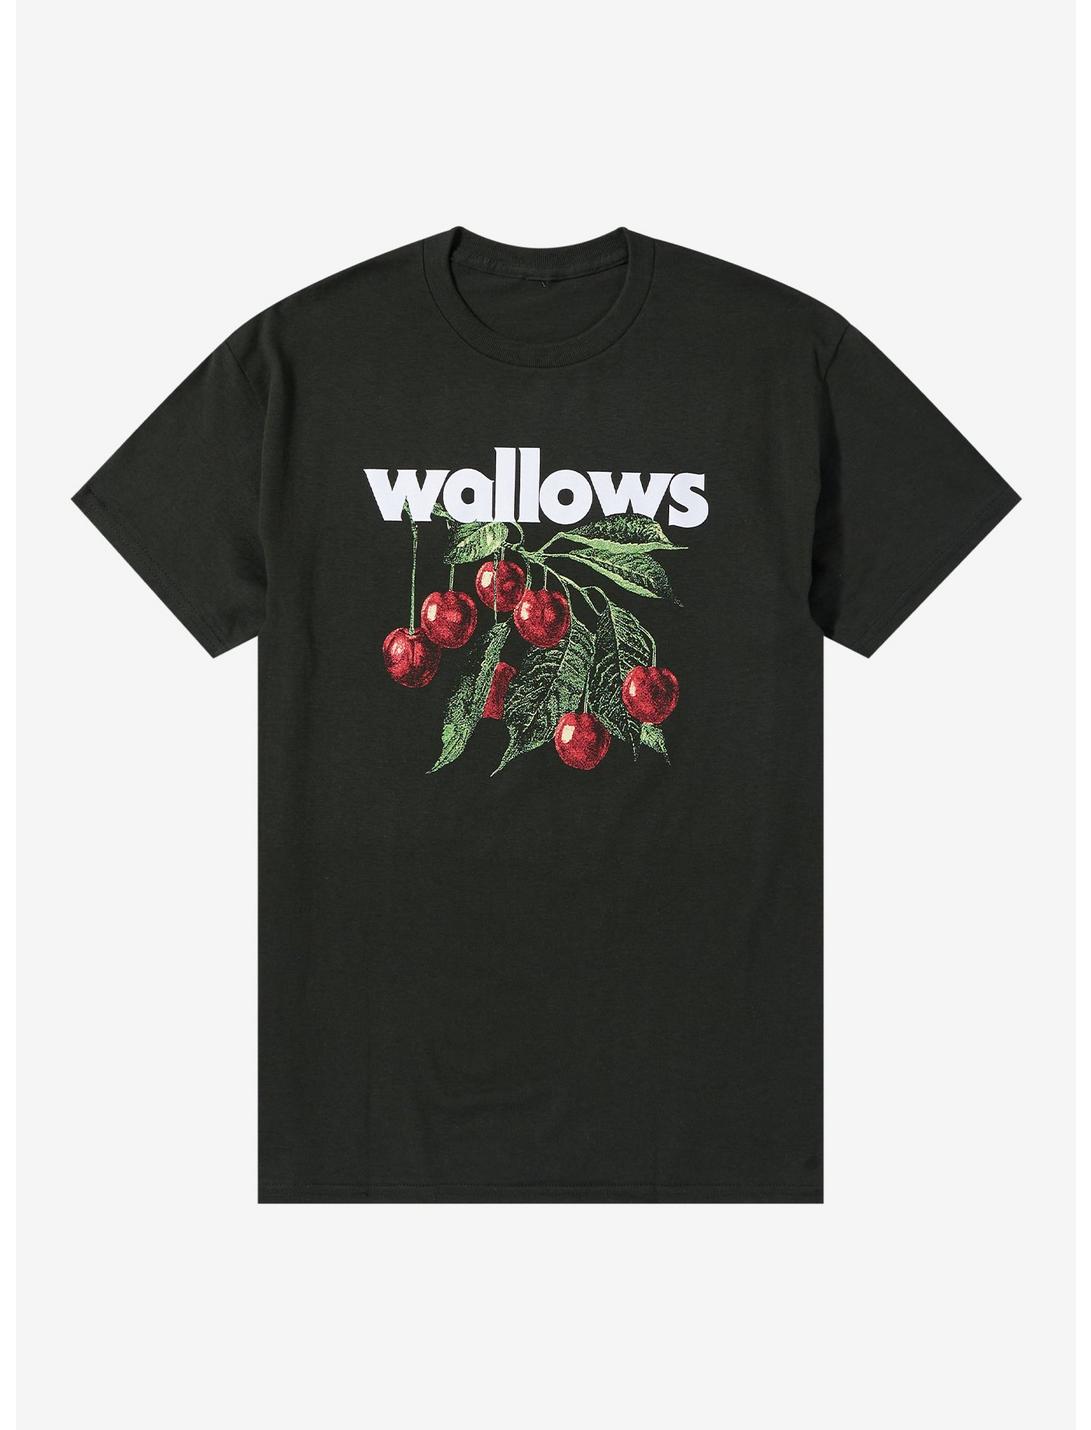 Wallows Cherries T-Shirt, FOREST GREEN, hi-res